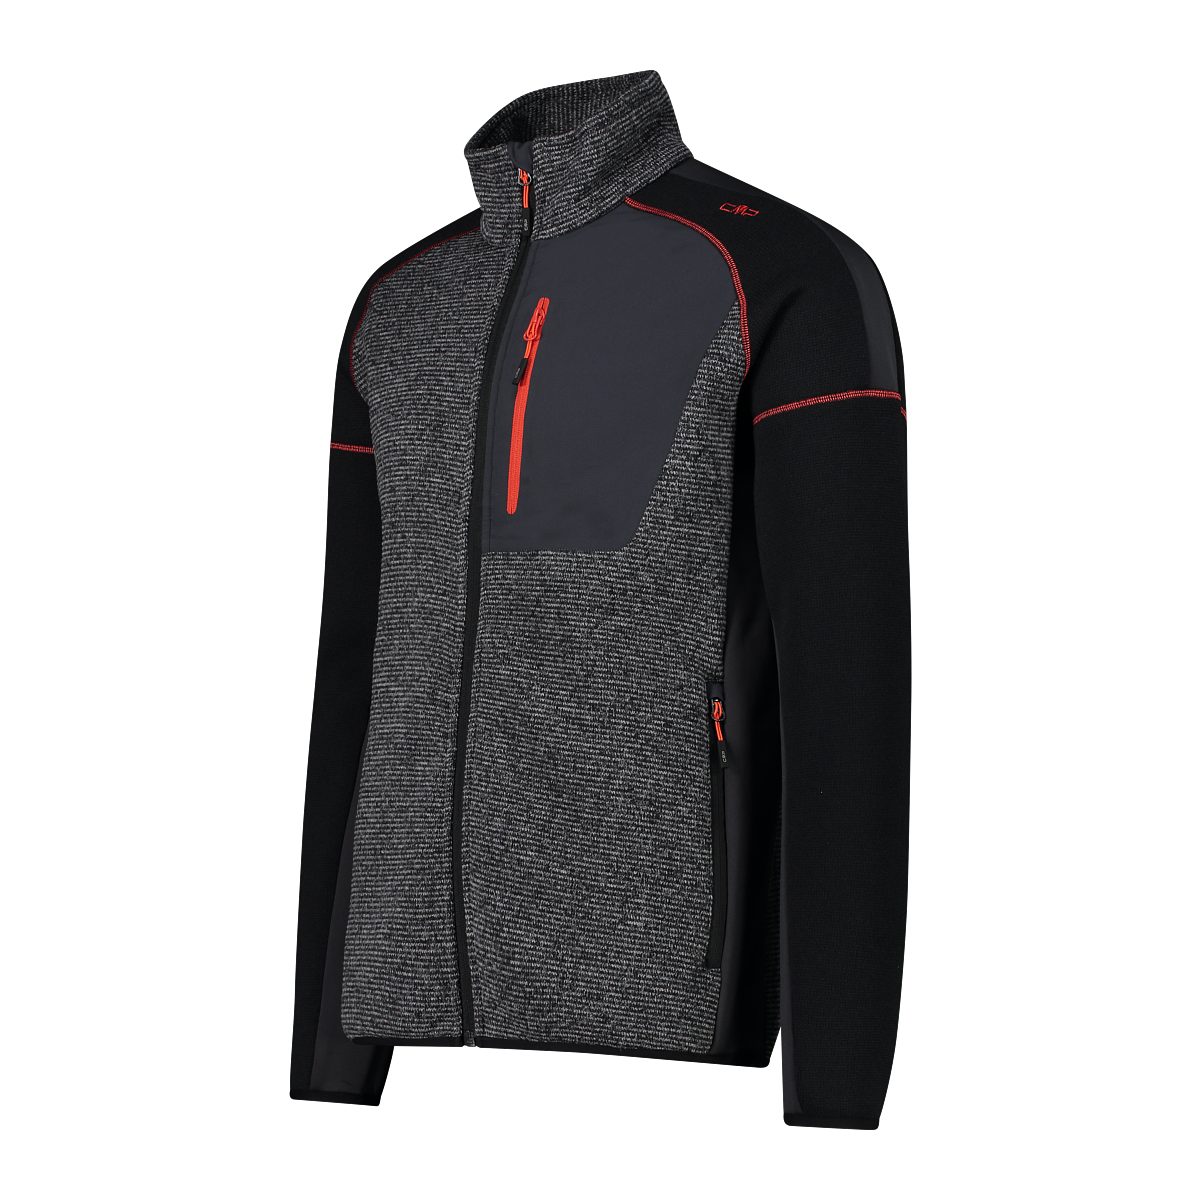 Jacket grey Fleece / Knit-Tech 49PU Man CMP Sweatjacke Fleece nero speziell verarbeitetes